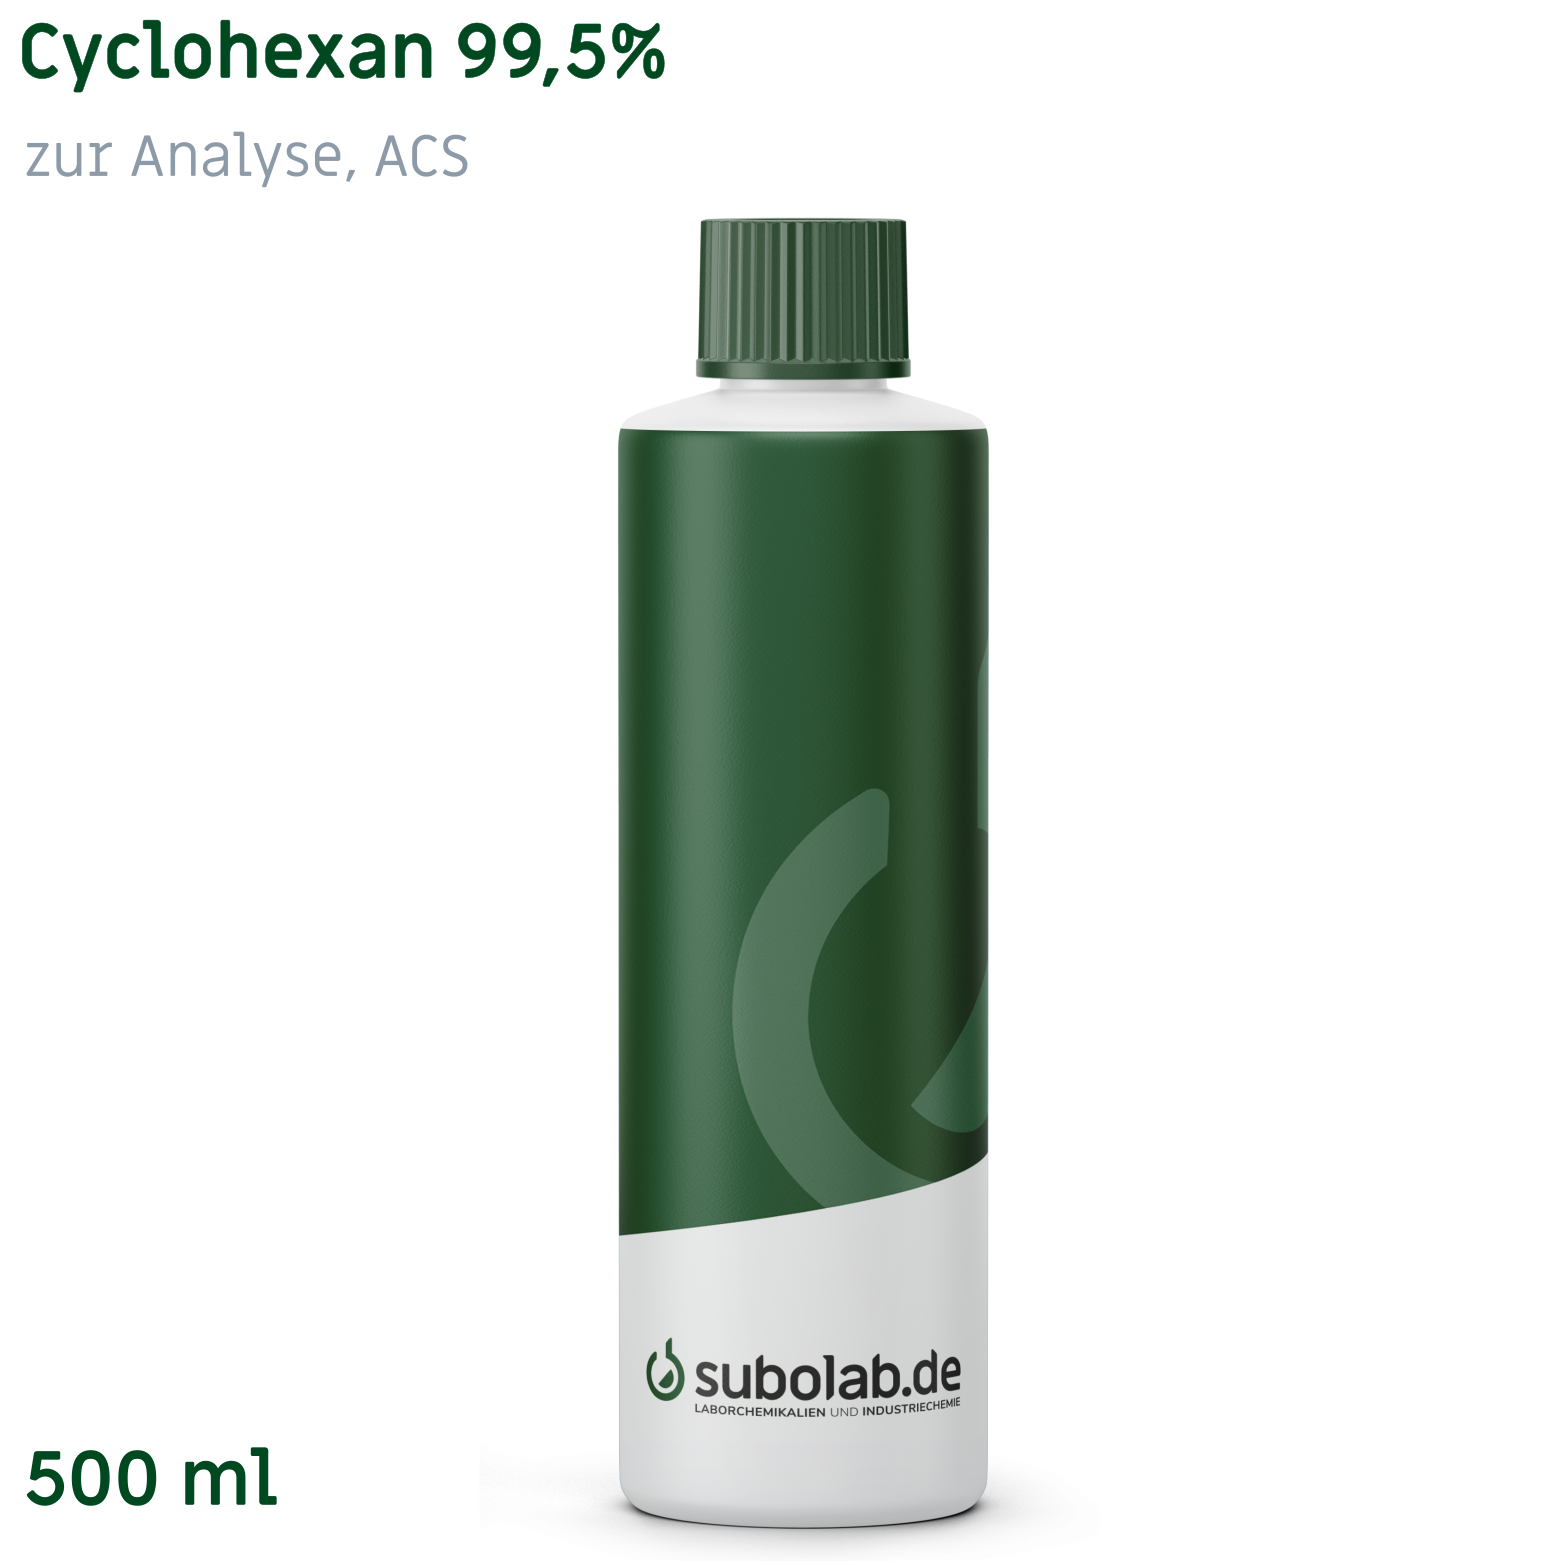 Bild von Cyclohexan 99,5% zur Analyse, ACS (500 ml)